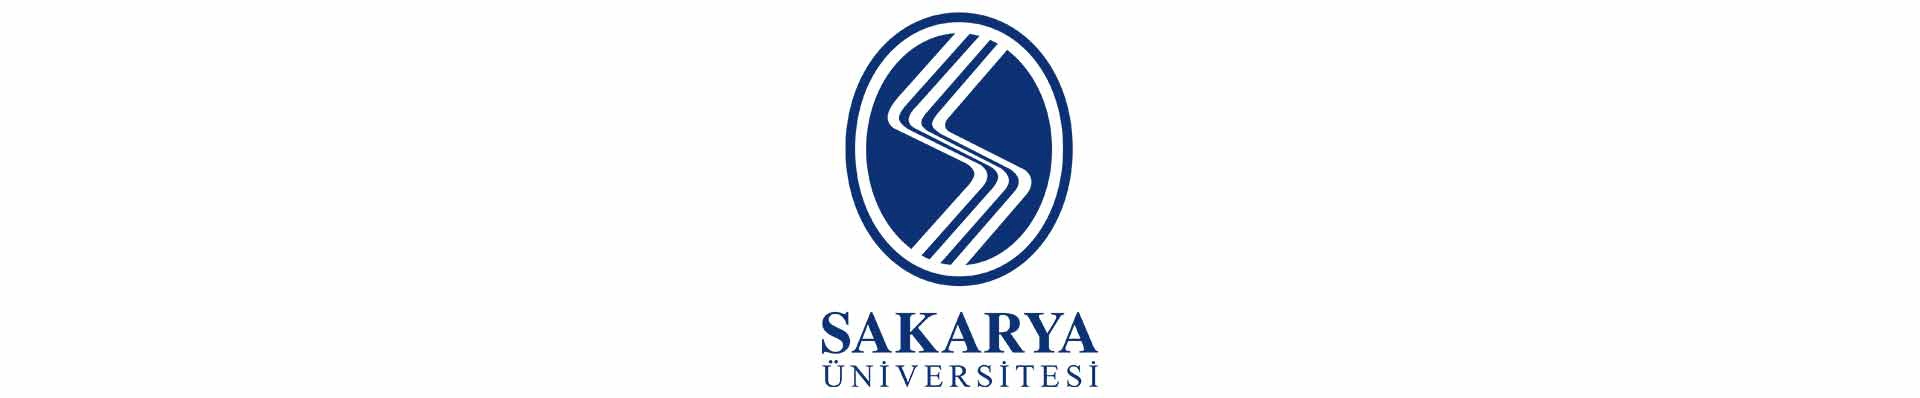 آزمون یوس دانشگاه ساکاریا (Sakarya University)